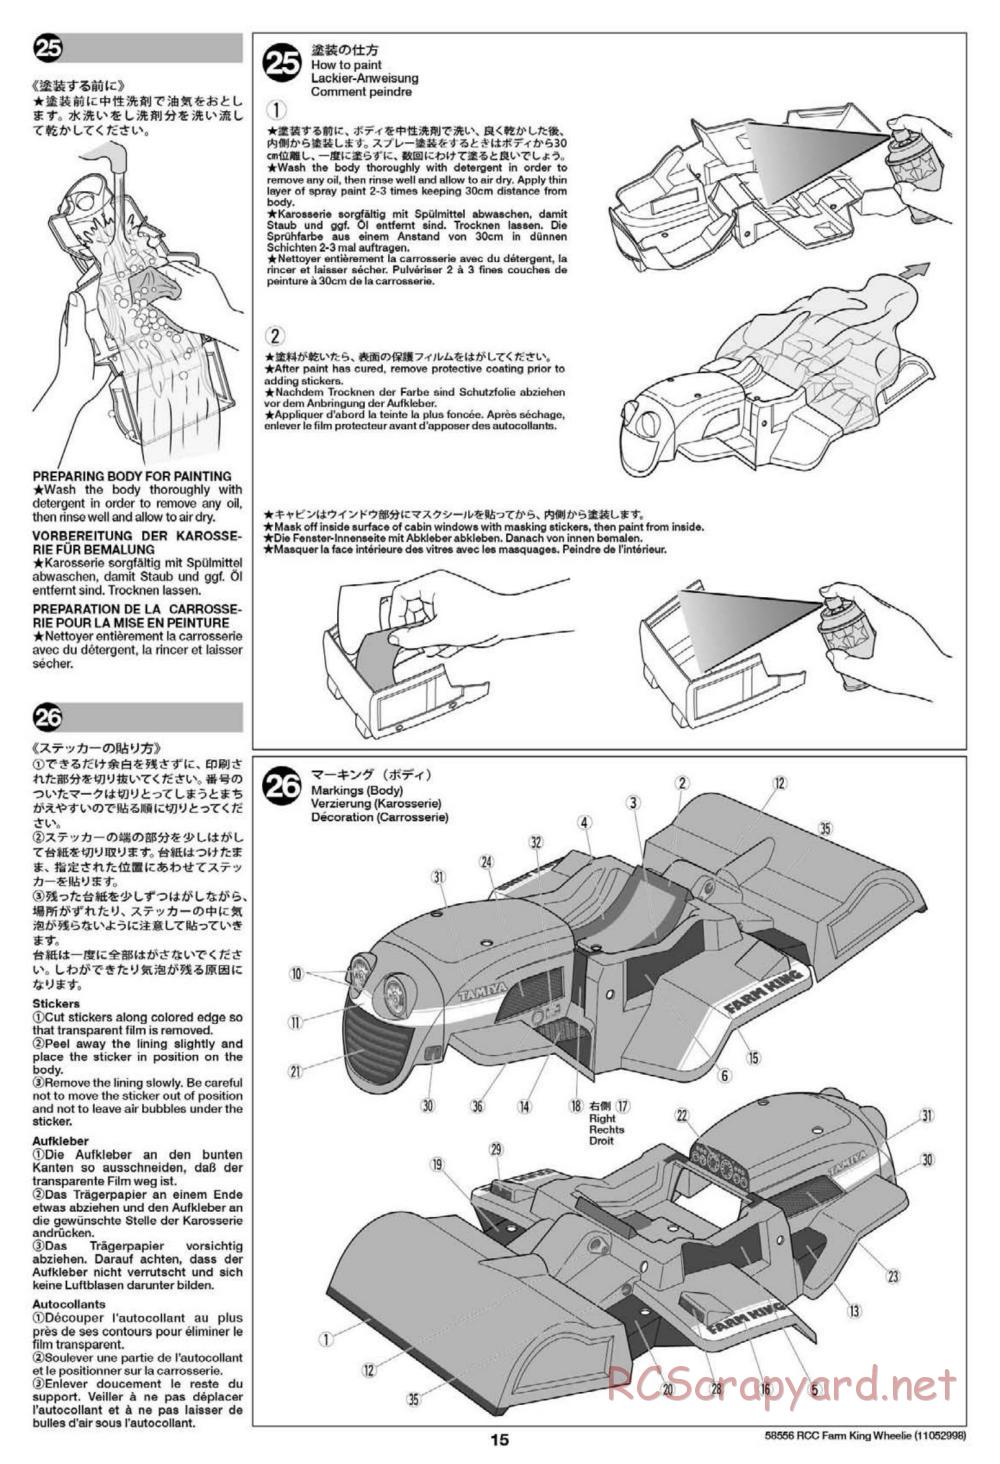 Tamiya - Farm King Wheelie Chassis - Manual - Page 15